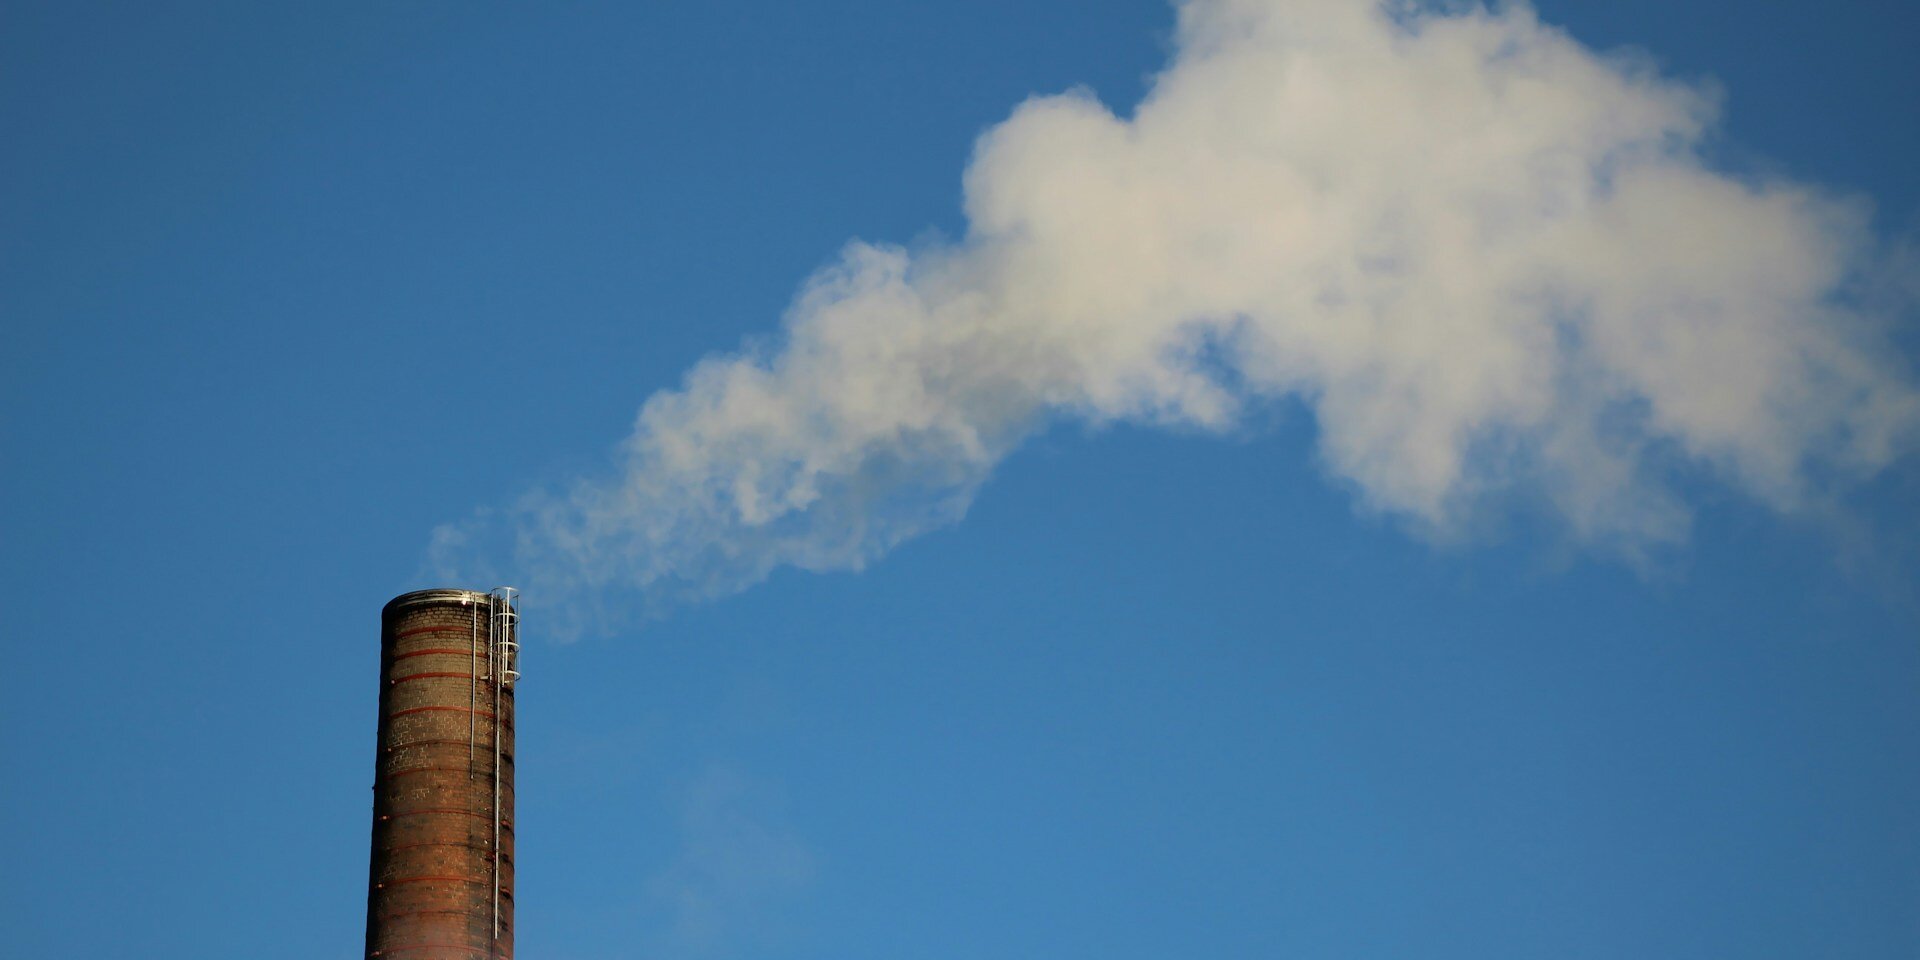 Pollution smoke arising from chimney